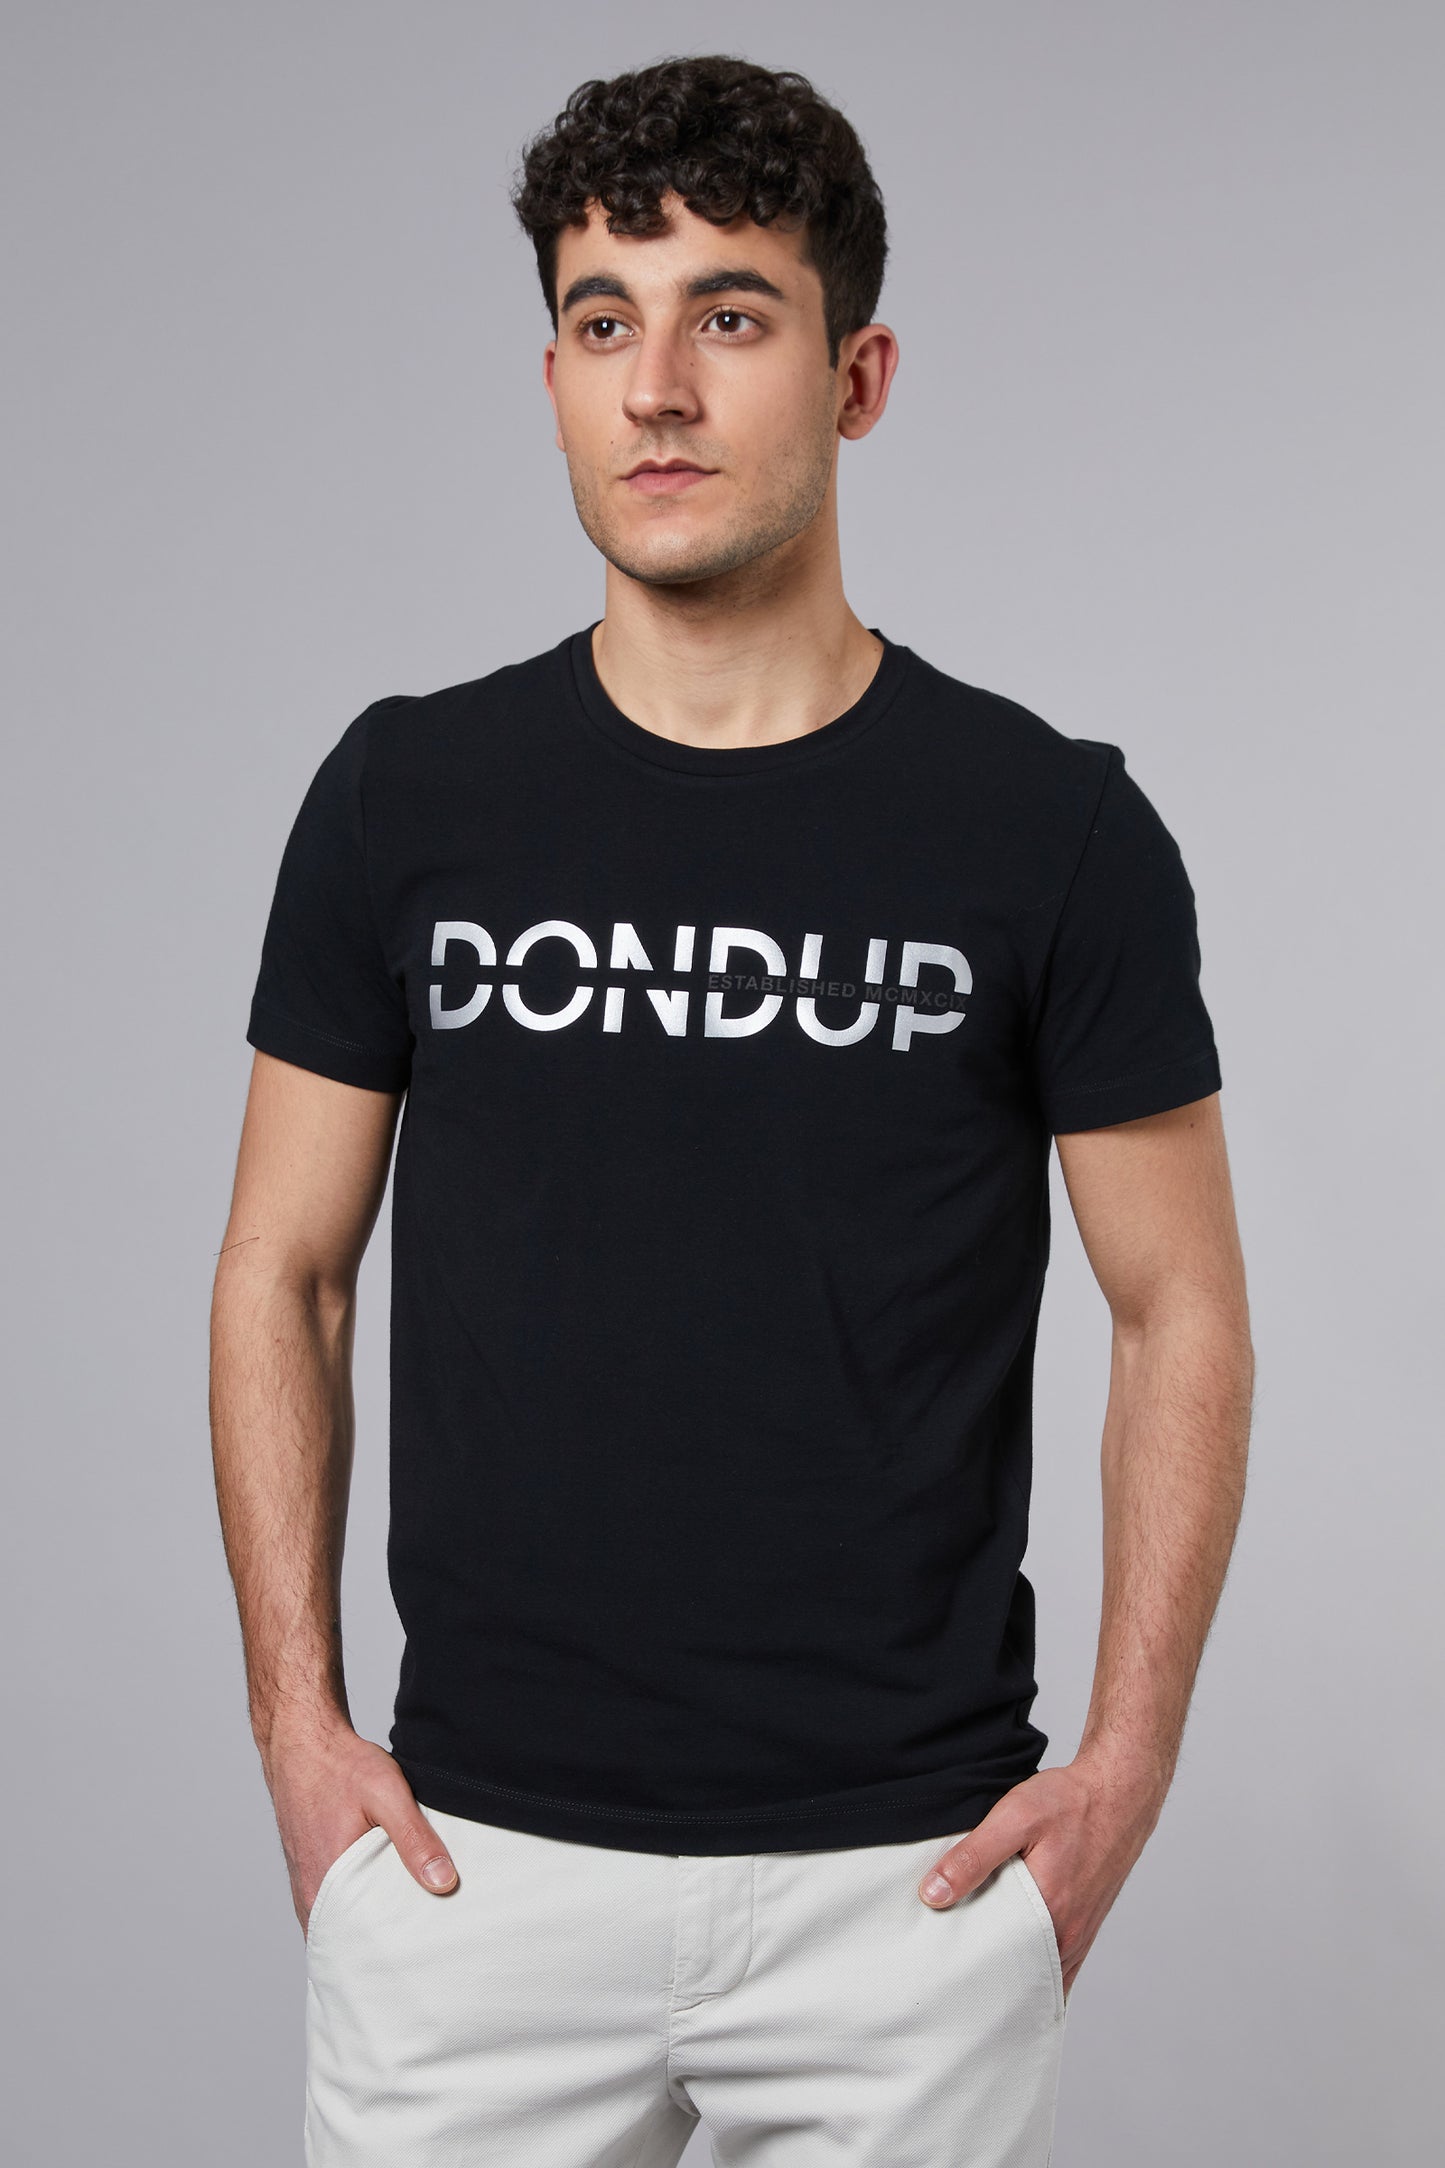 Vidner protein Mania Dondup T-shirt Bianco Uomo » Modamica